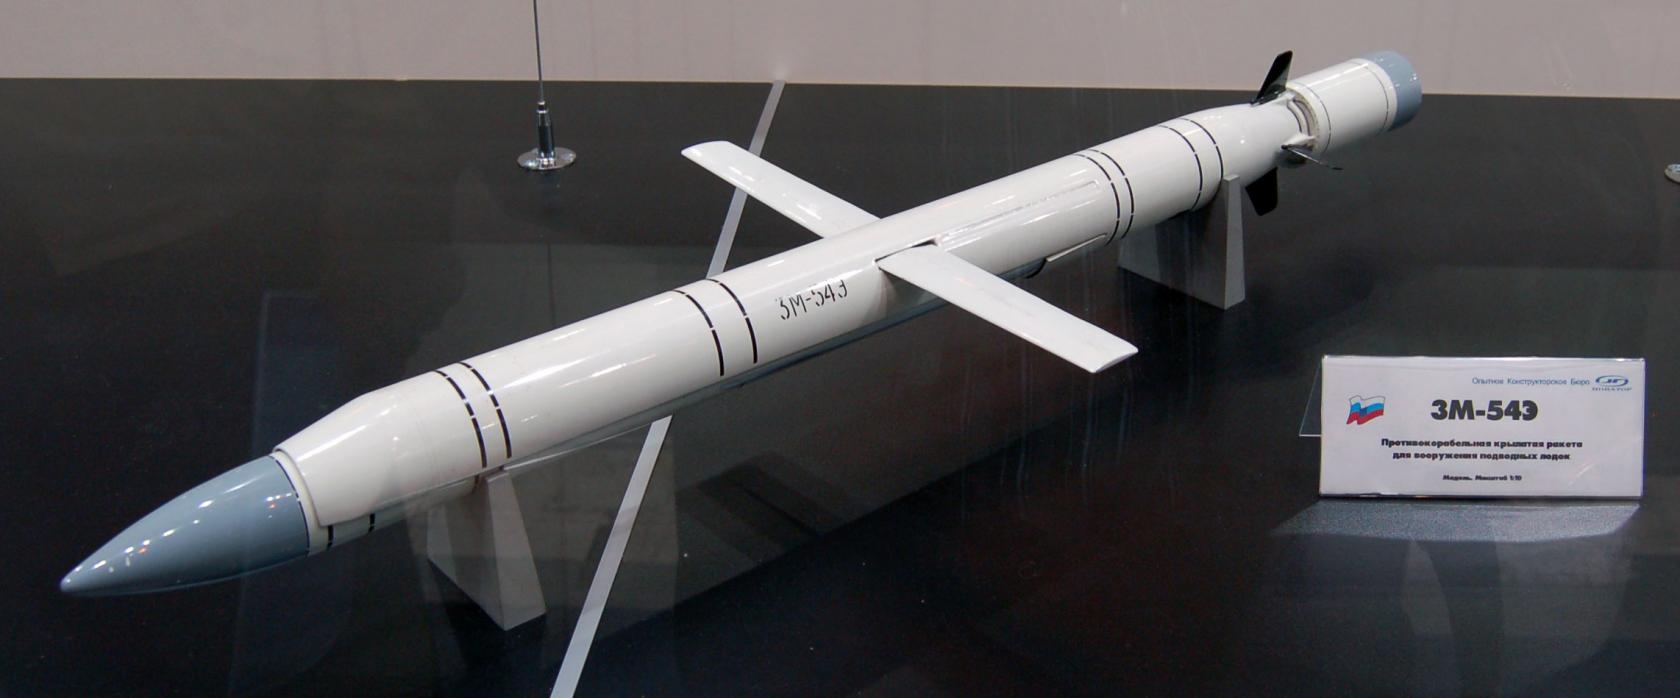 TASM - Tomahawk Anti-Ship Missile, или  "Гранит" по-американски